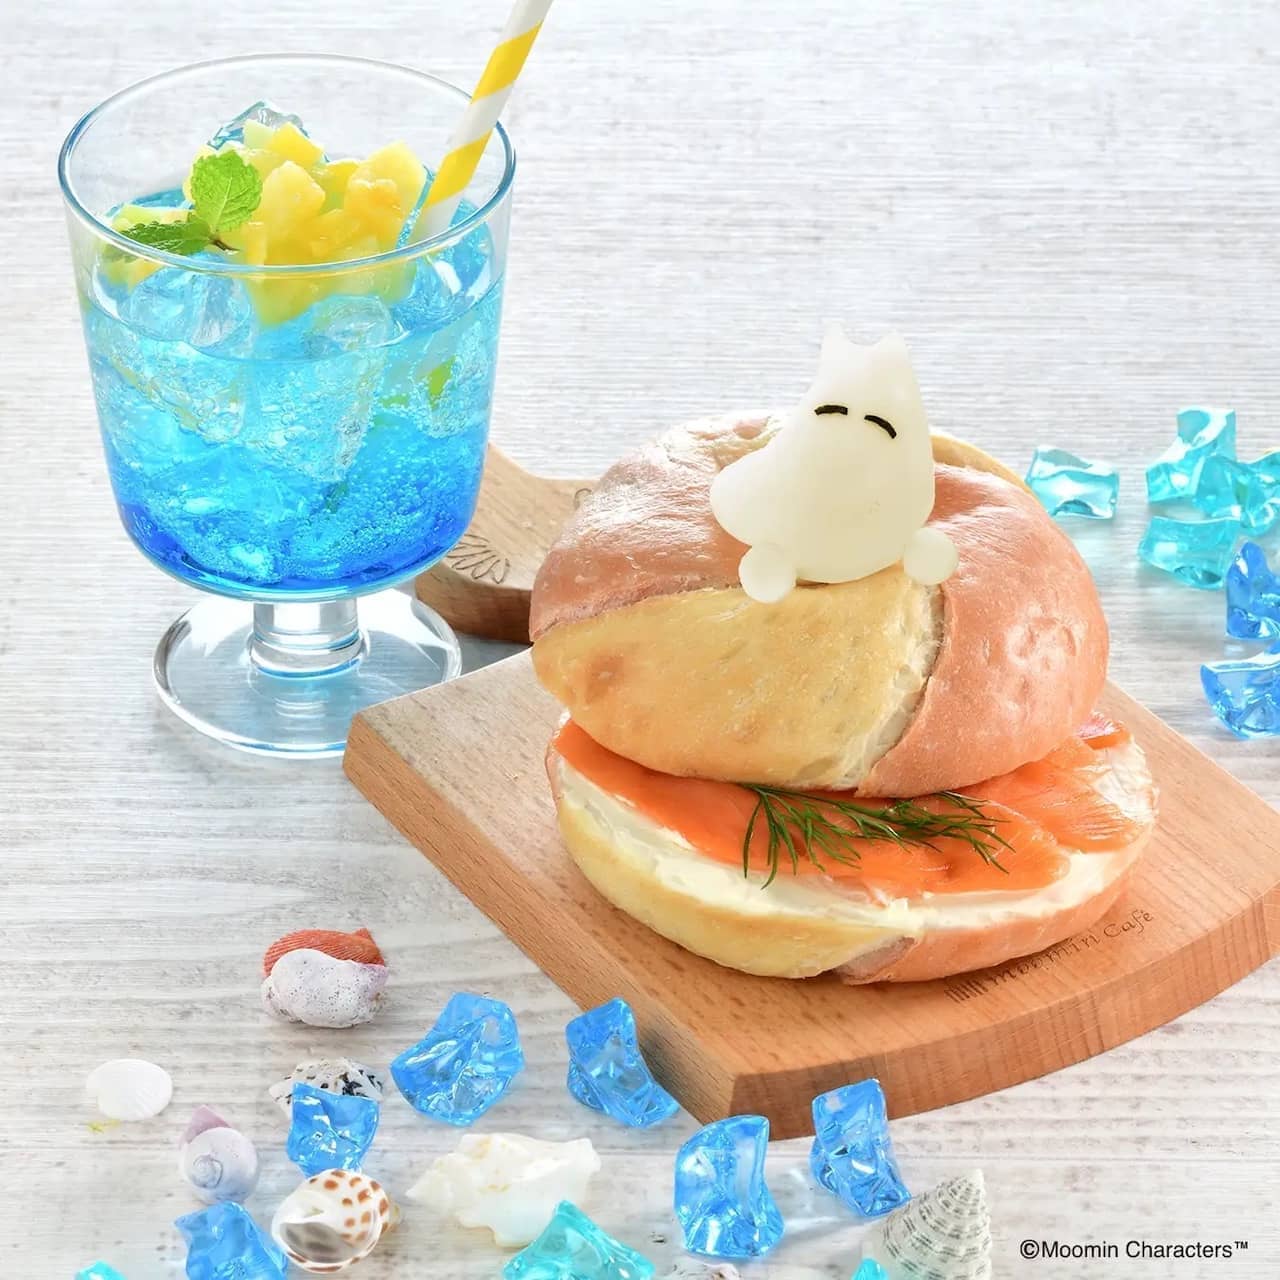 Moomin Cafe and Moomin Stand "Ukiwa Bagel Sandwich - Salmon Cream Cheese - Drink Set"